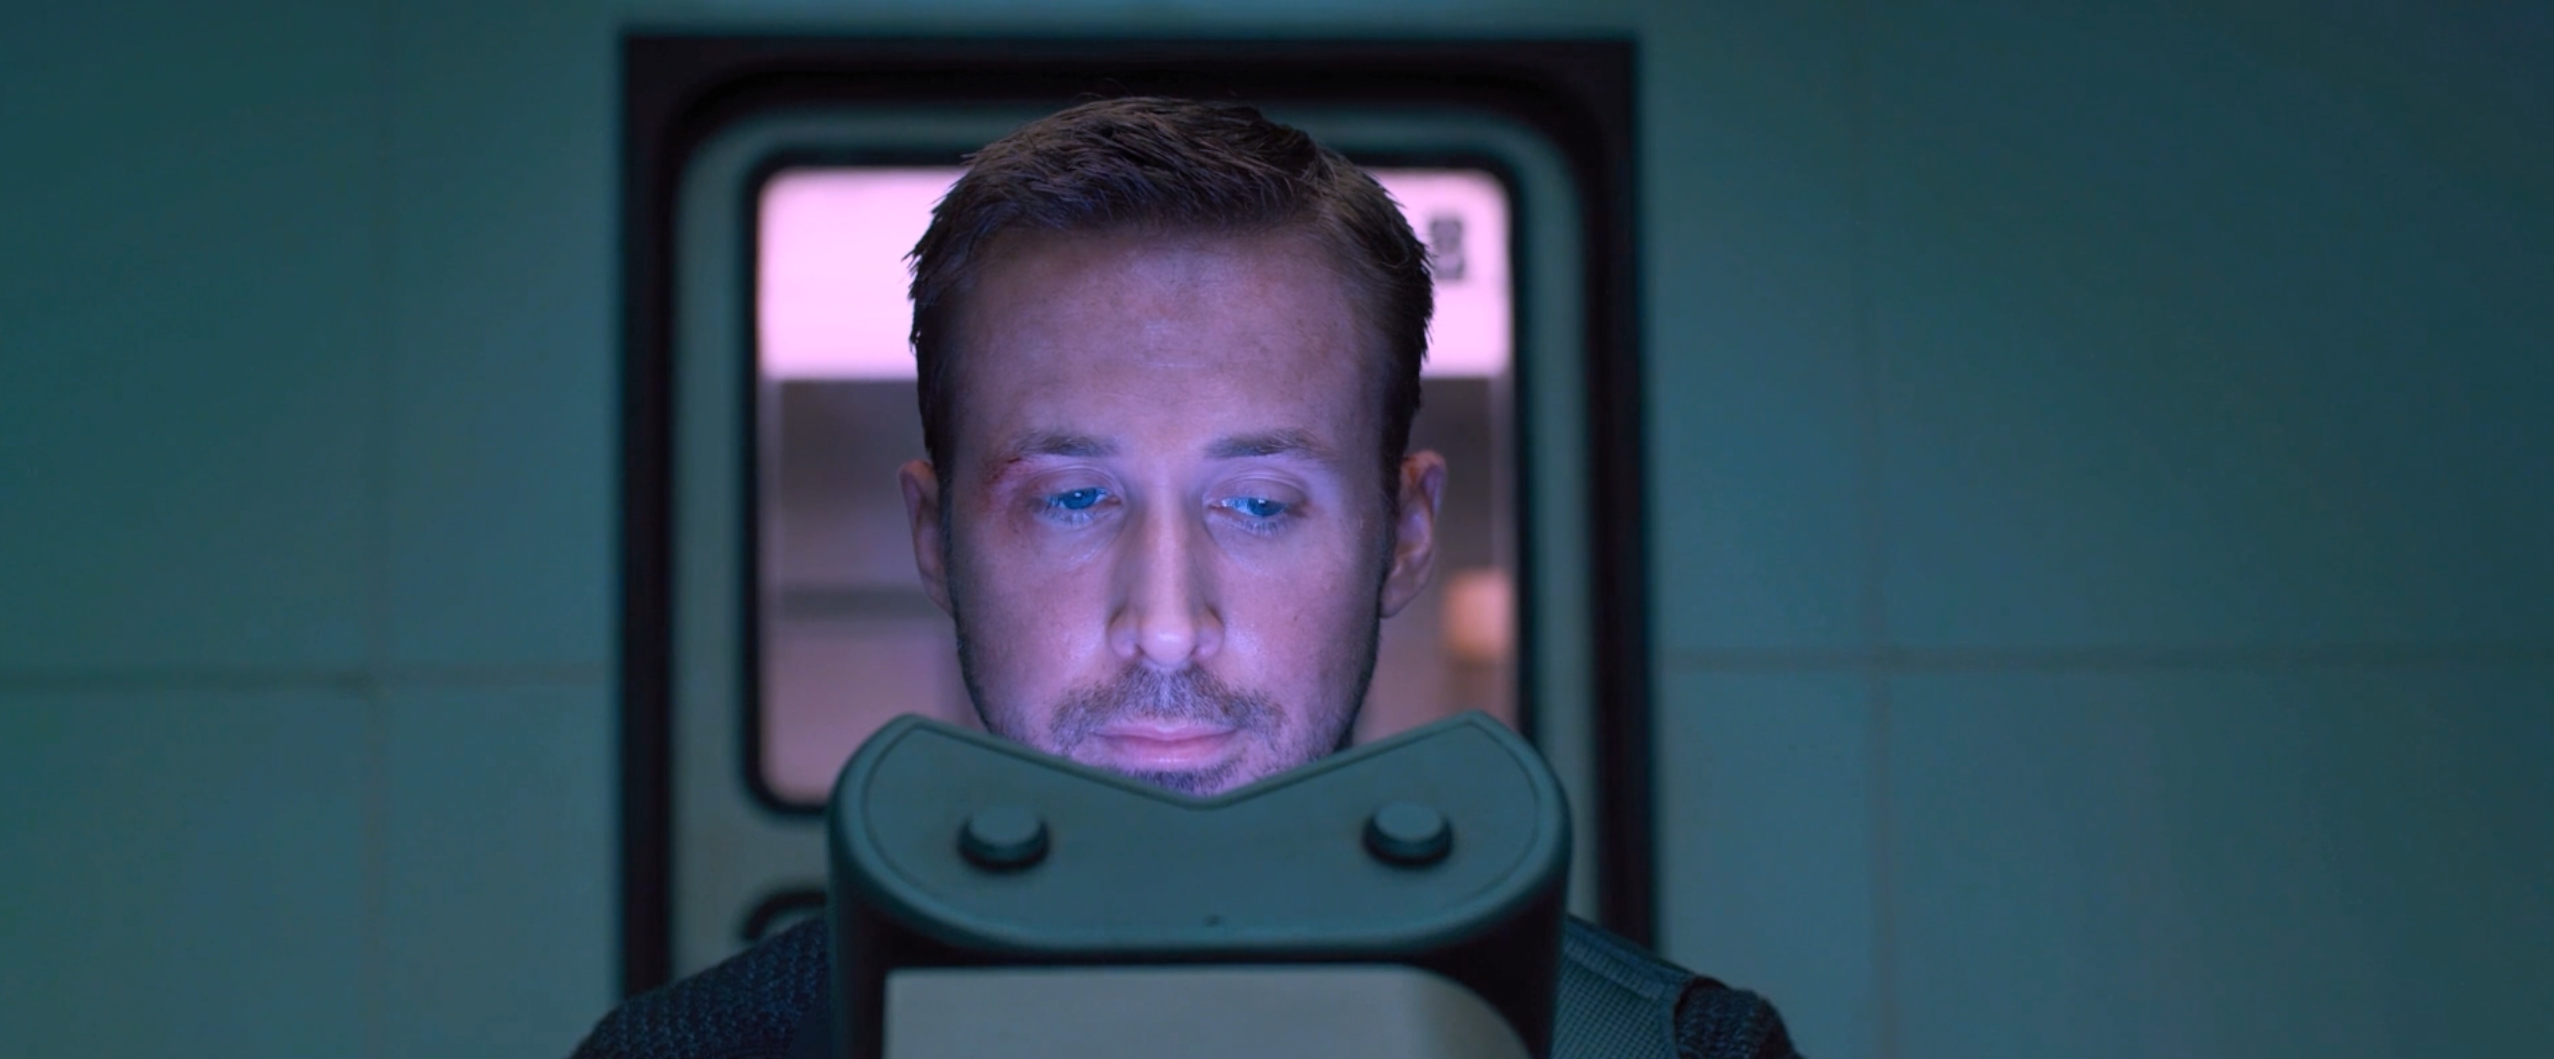 Ryan Gosling DNA Searching scene - Blade Runner 2049 (Green Screen)